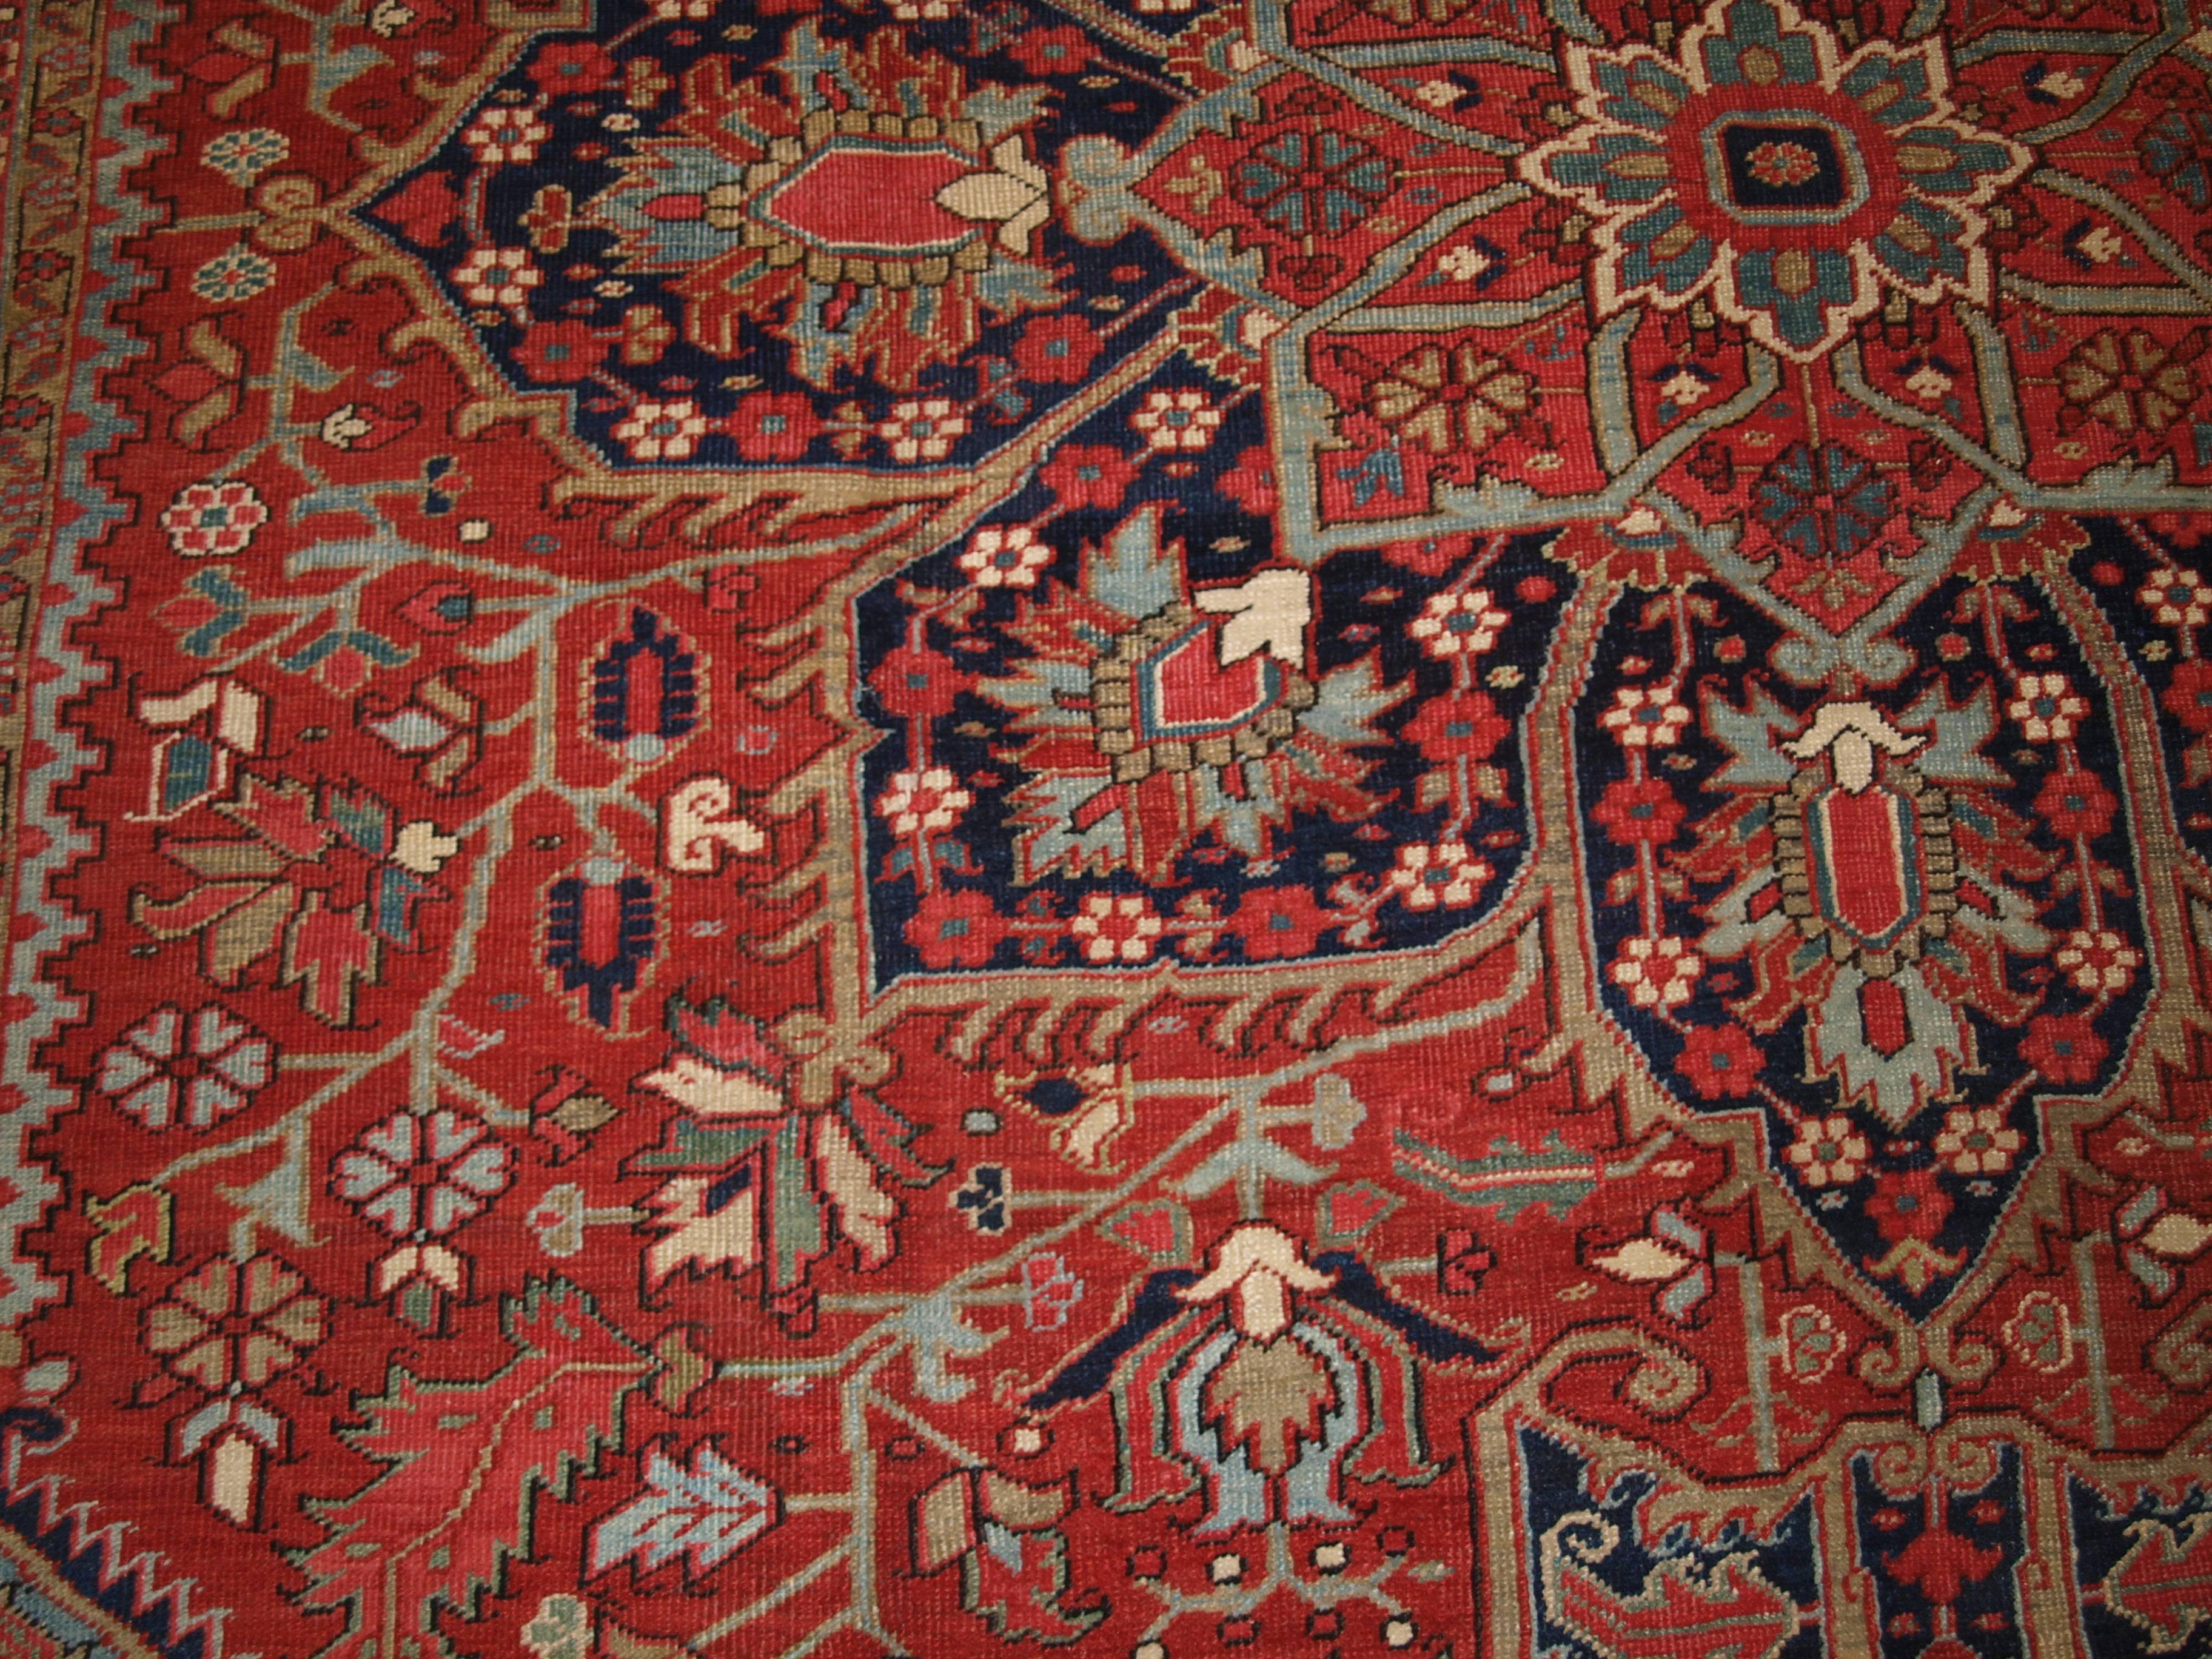 20th Century Antique Persian Heriz Carpet, Soft Reds and Light Blues